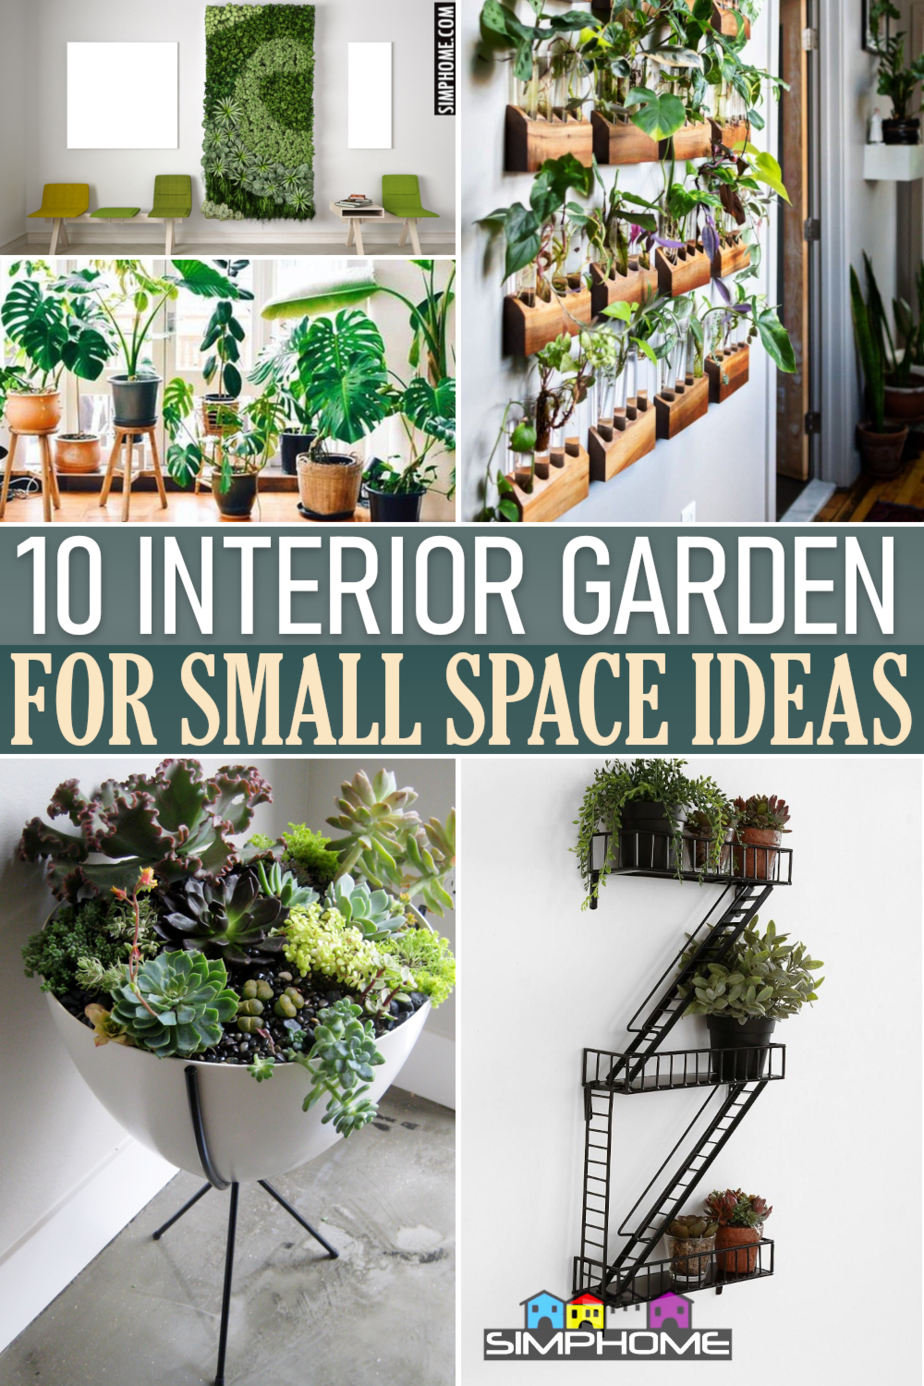 10 Interior Garden Ideas for Small Property Featured Image via SIMPHOME.COMThumbnail